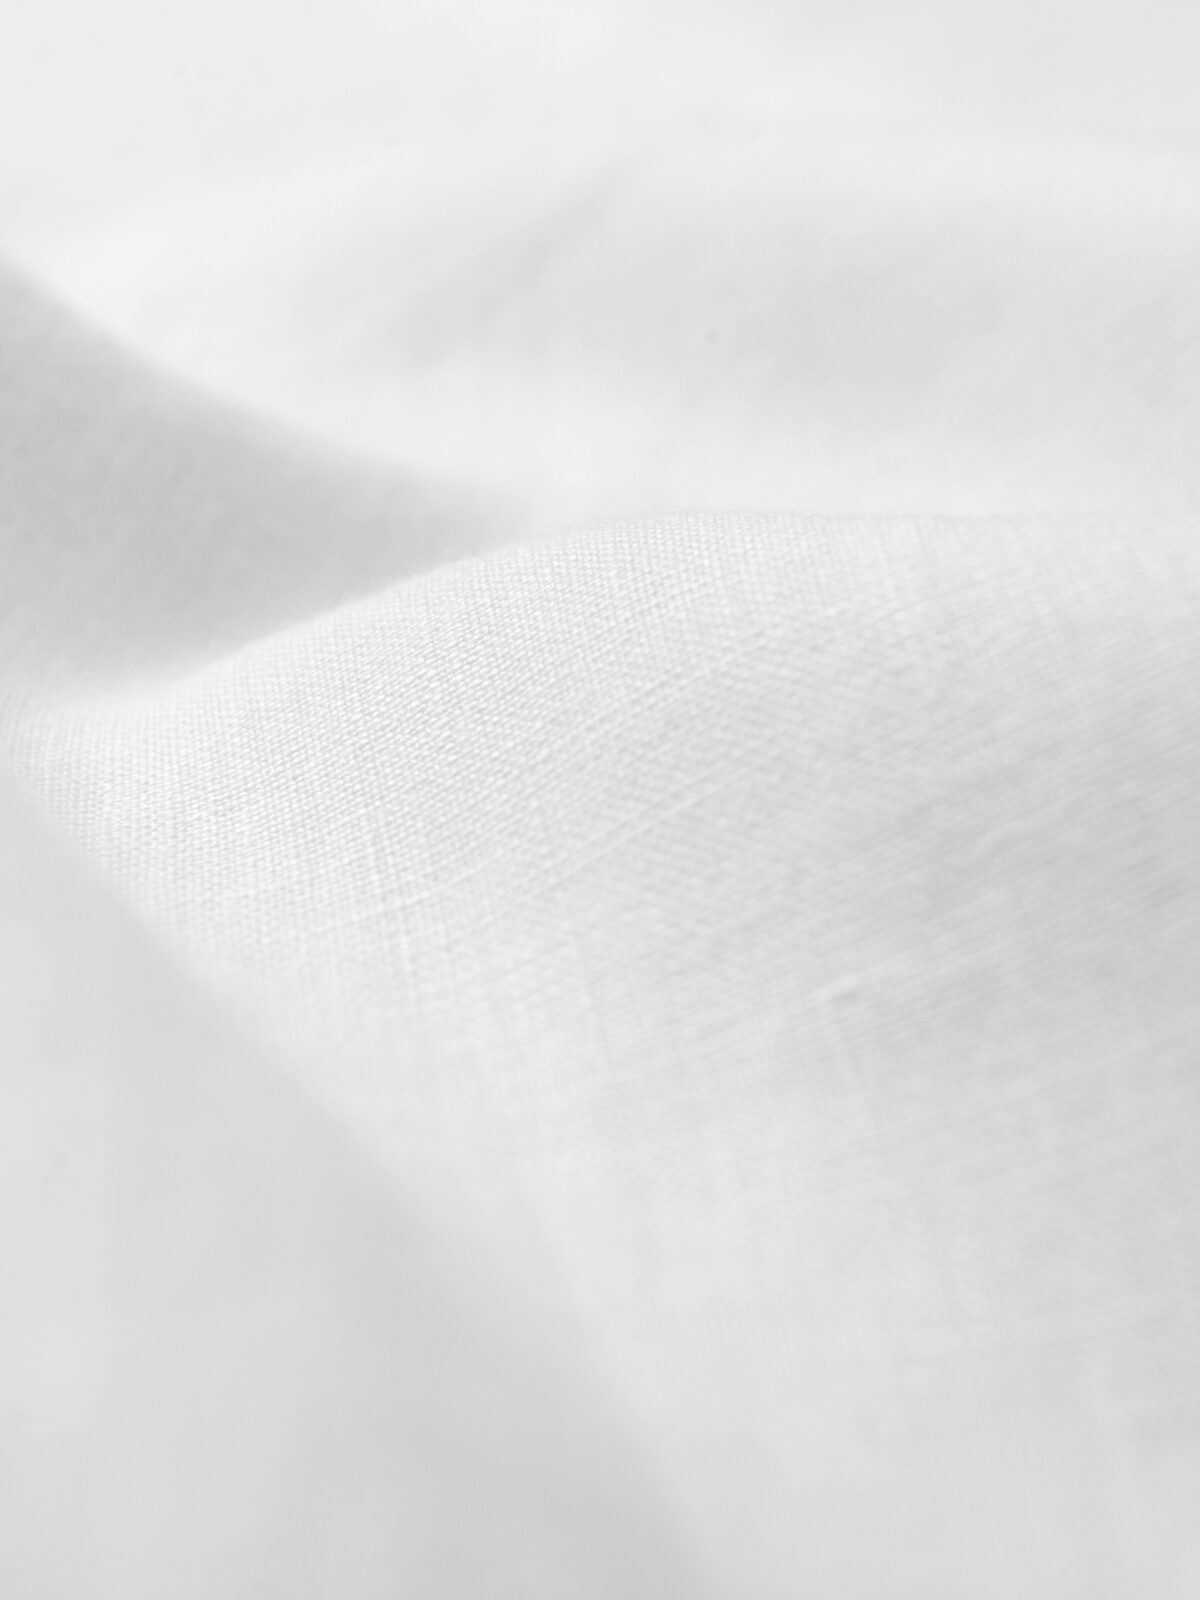 Positano White Italian Linen Shirts by Proper Cloth